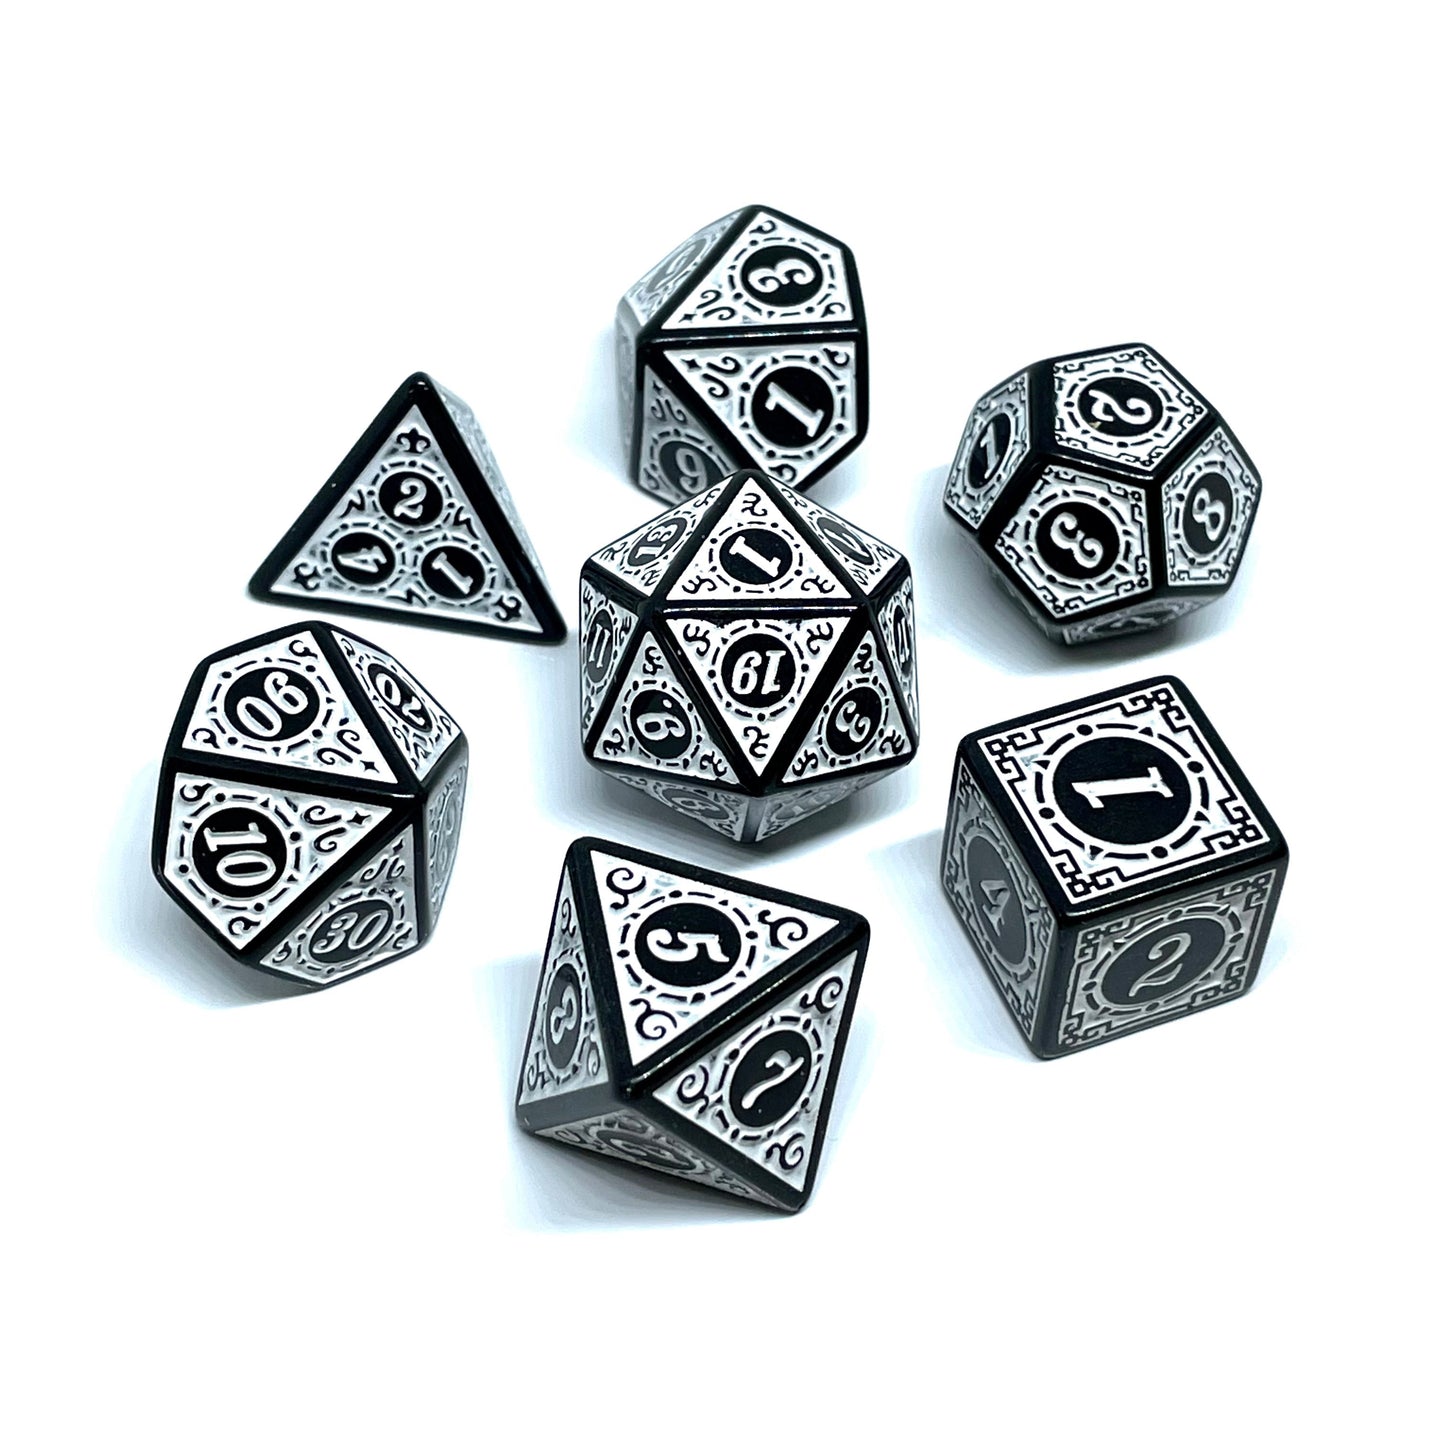 White Dragon plastic dnd dice set of 7 white and black